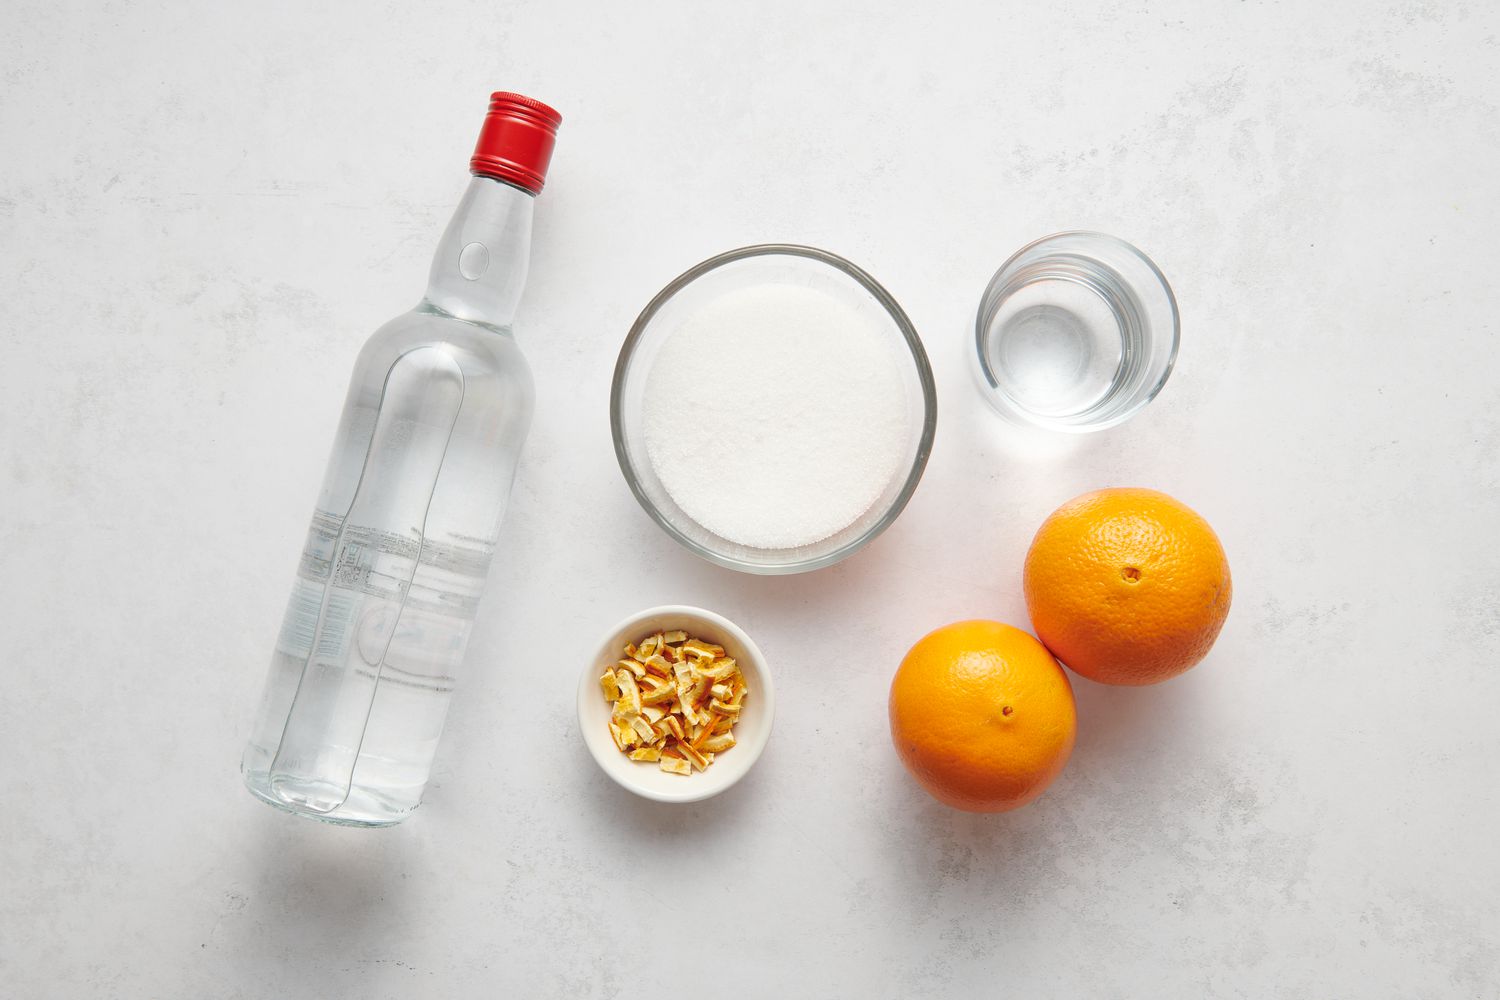 Ingredients to make homemade orange liqueur